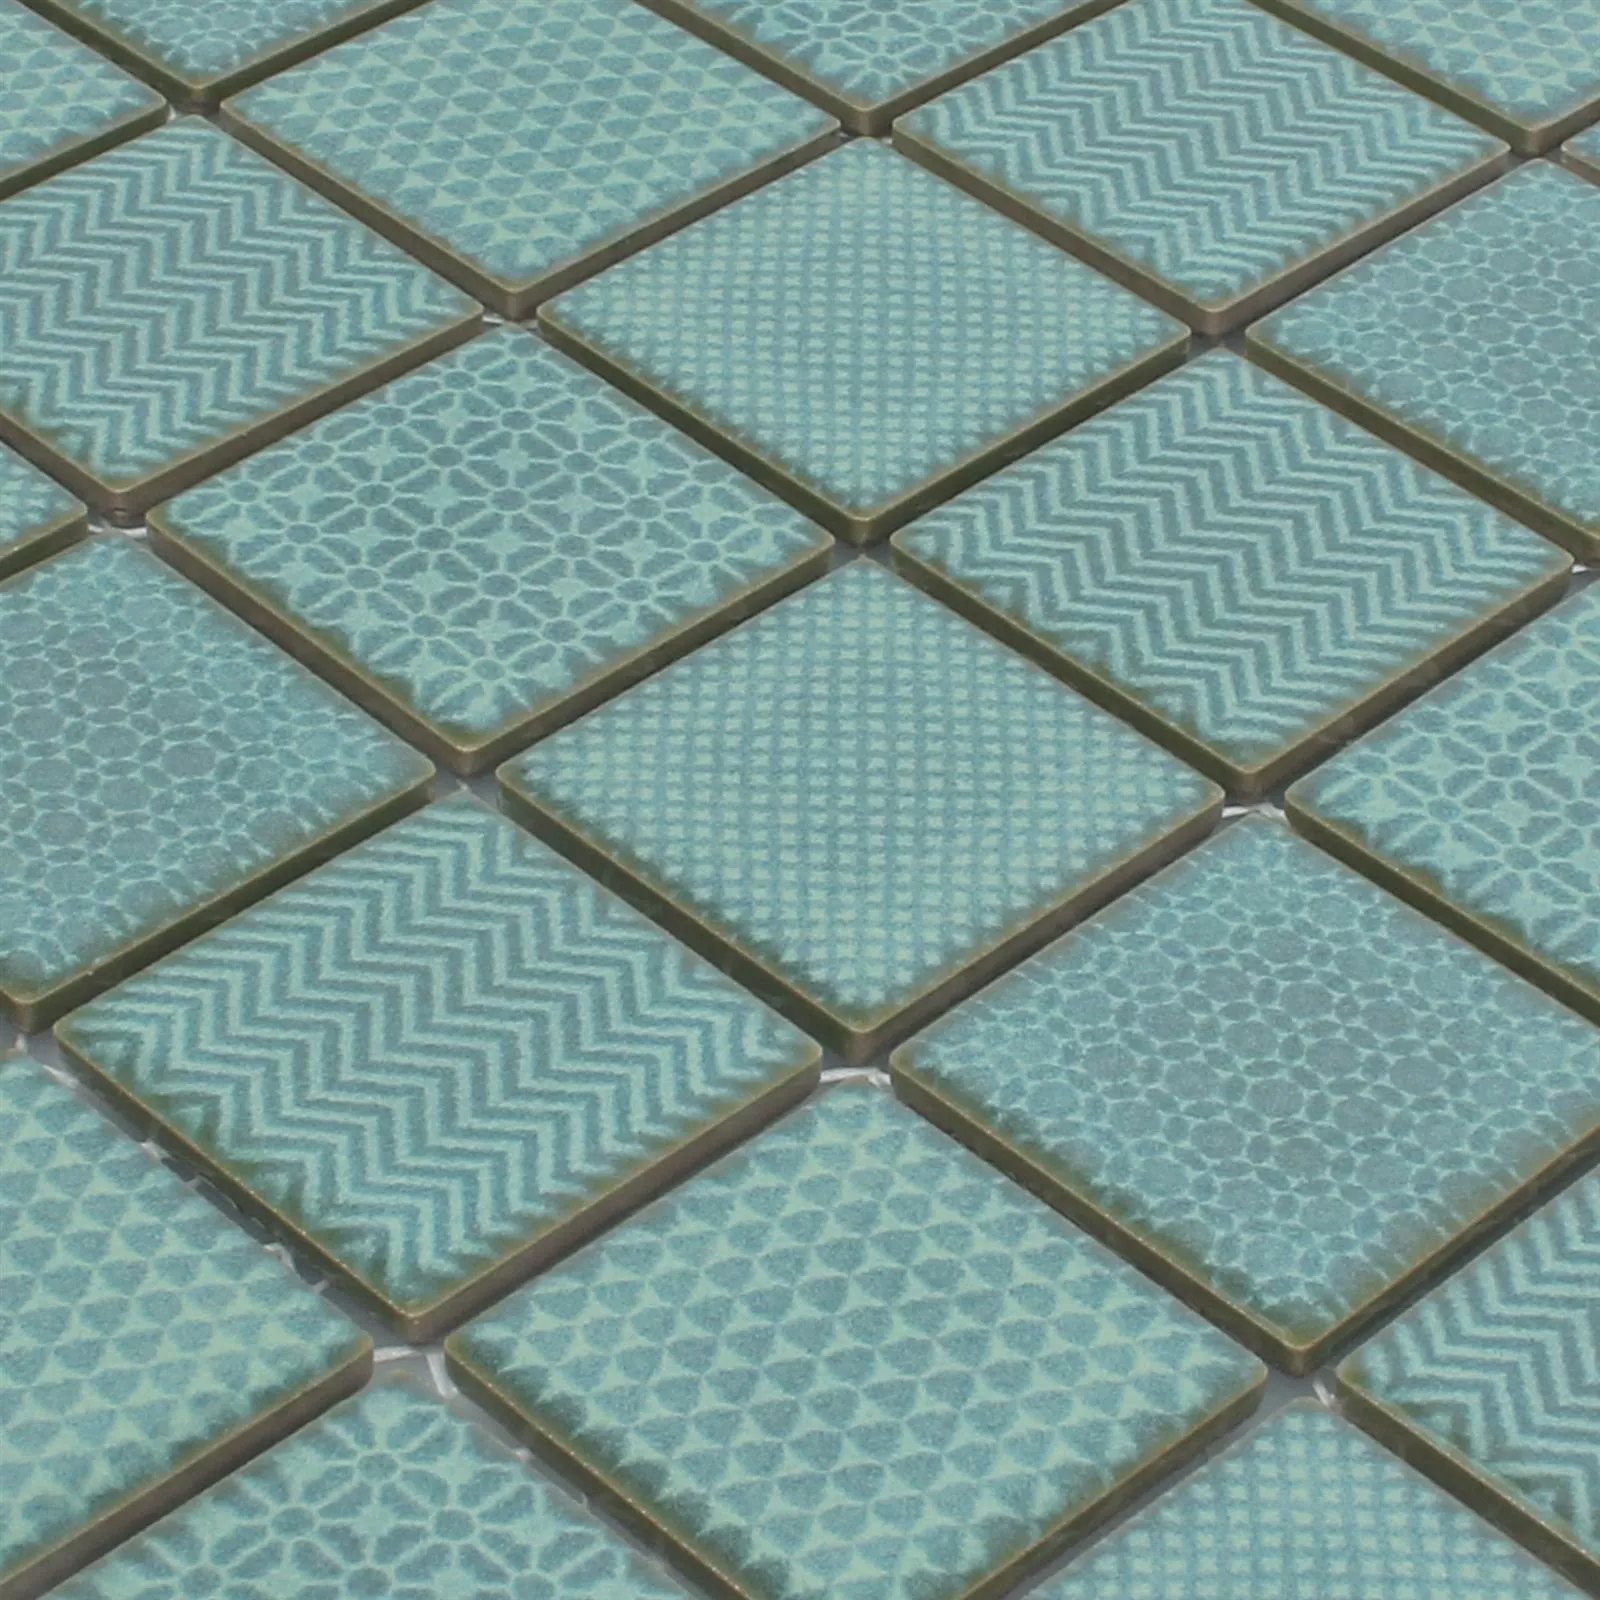 Sample Mosaic Tiles Ceramic Sapporo Green